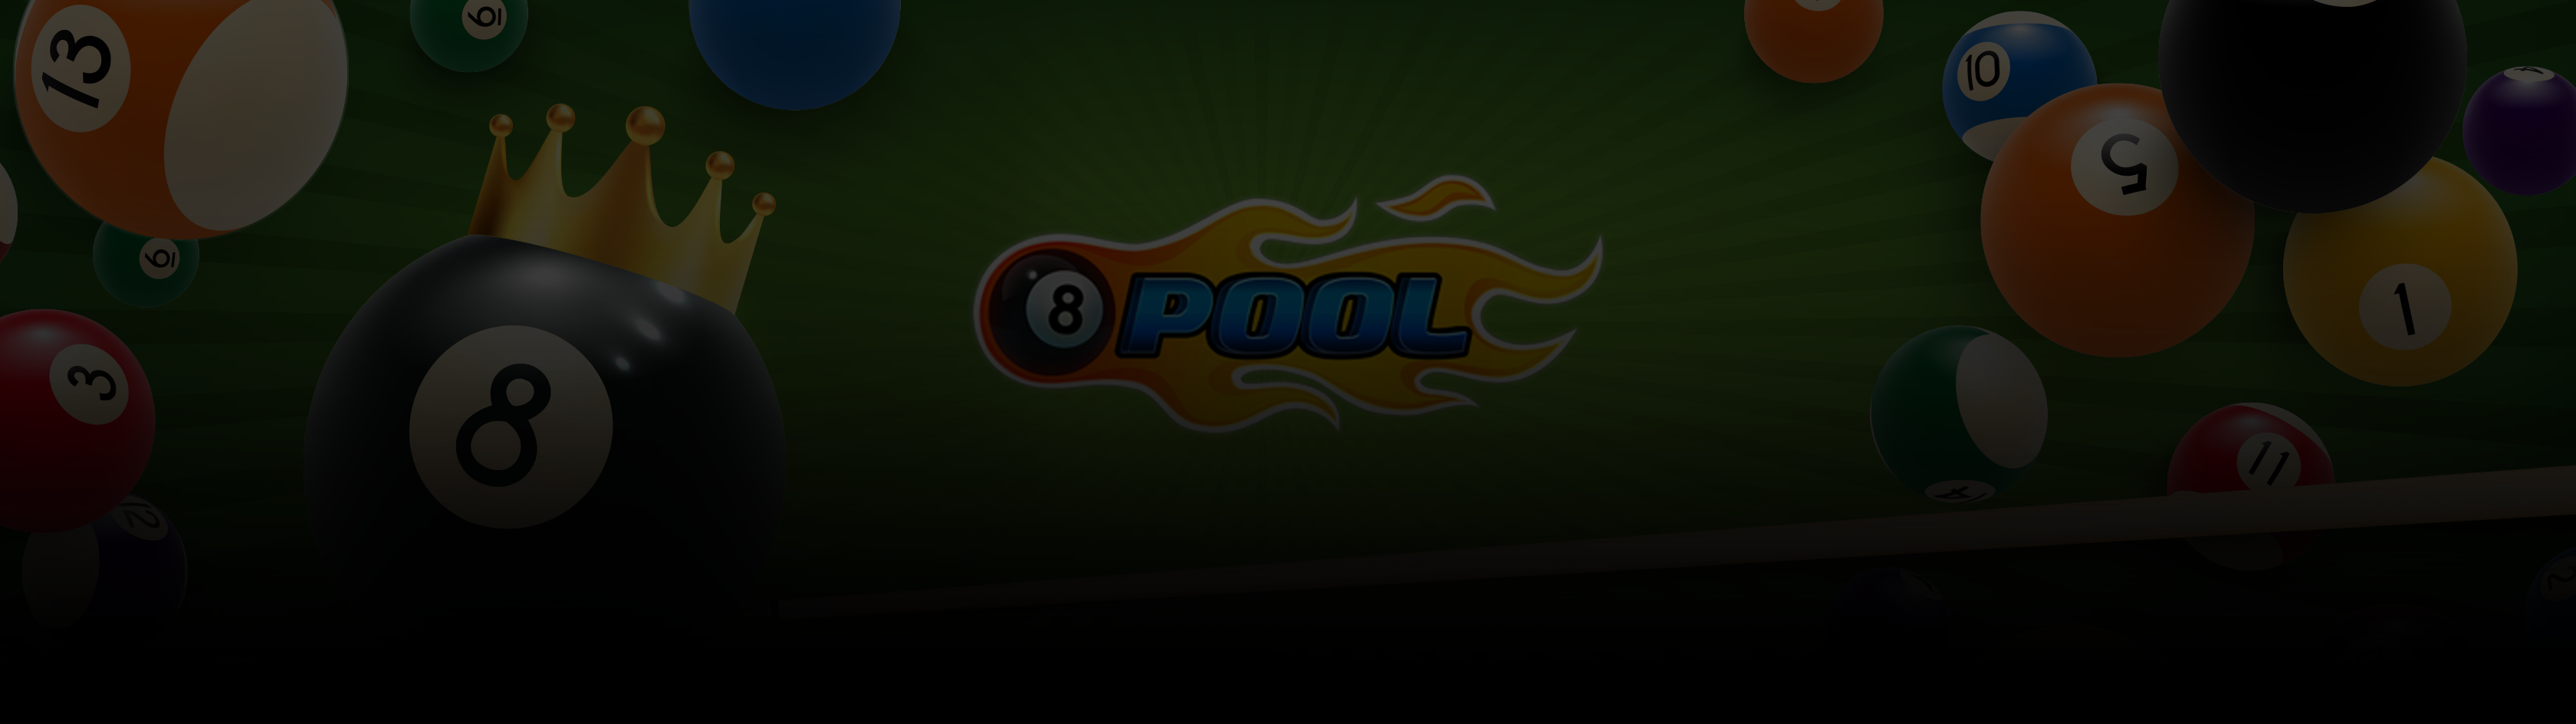 tournament-banner